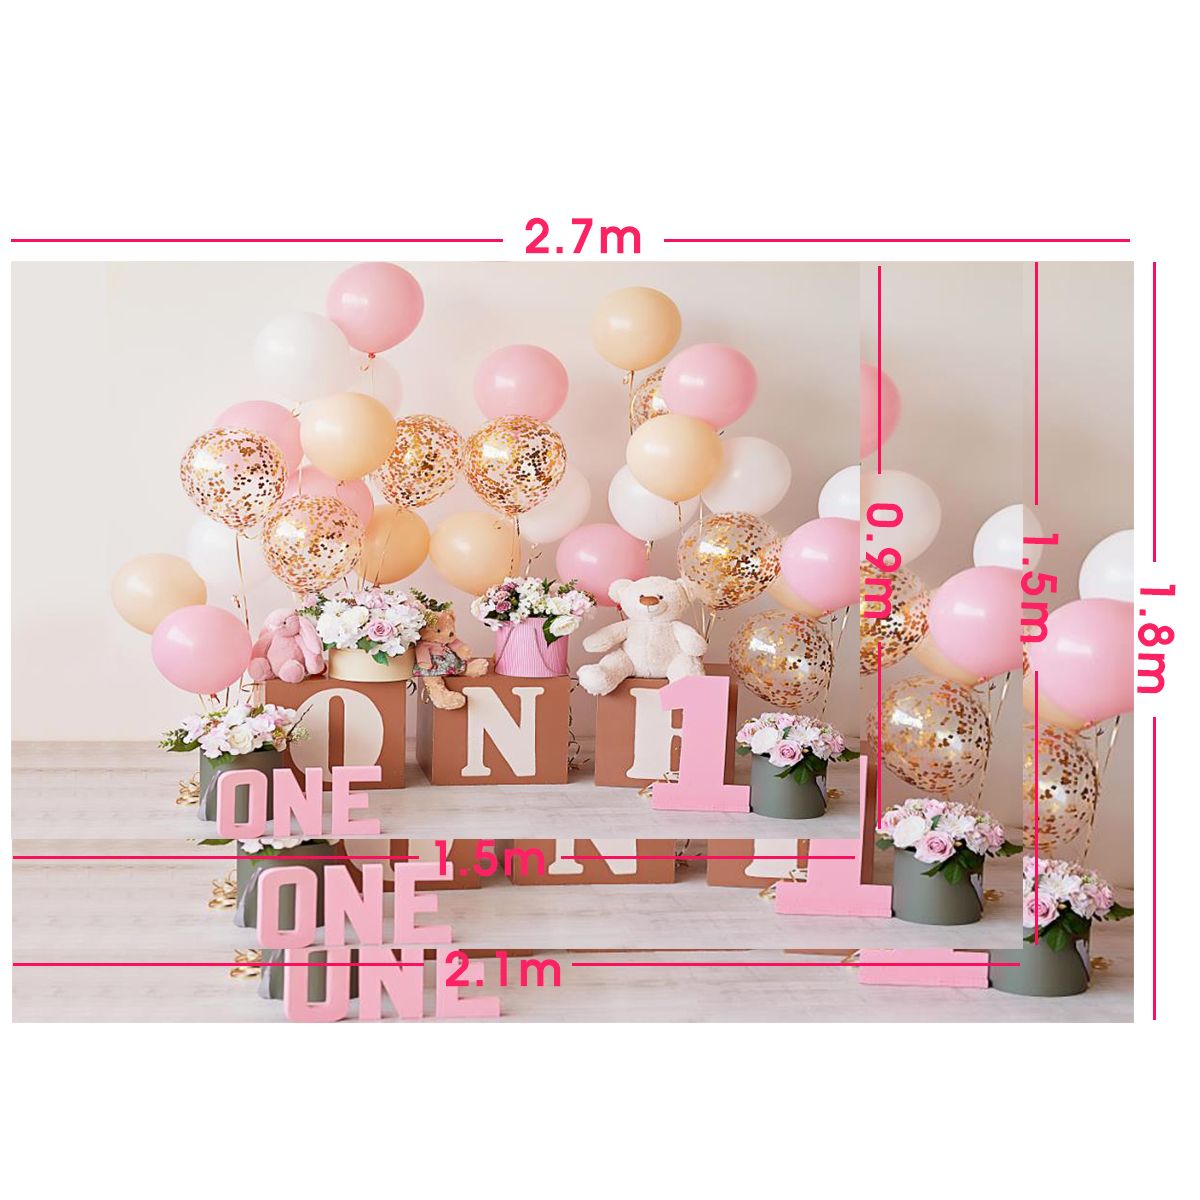 5x3FT-7x5FT-9x6FT-1st-Birthday-Pink-Balloon-Bear-Photography-Backdrop-Background-Studio-Prop-1618188